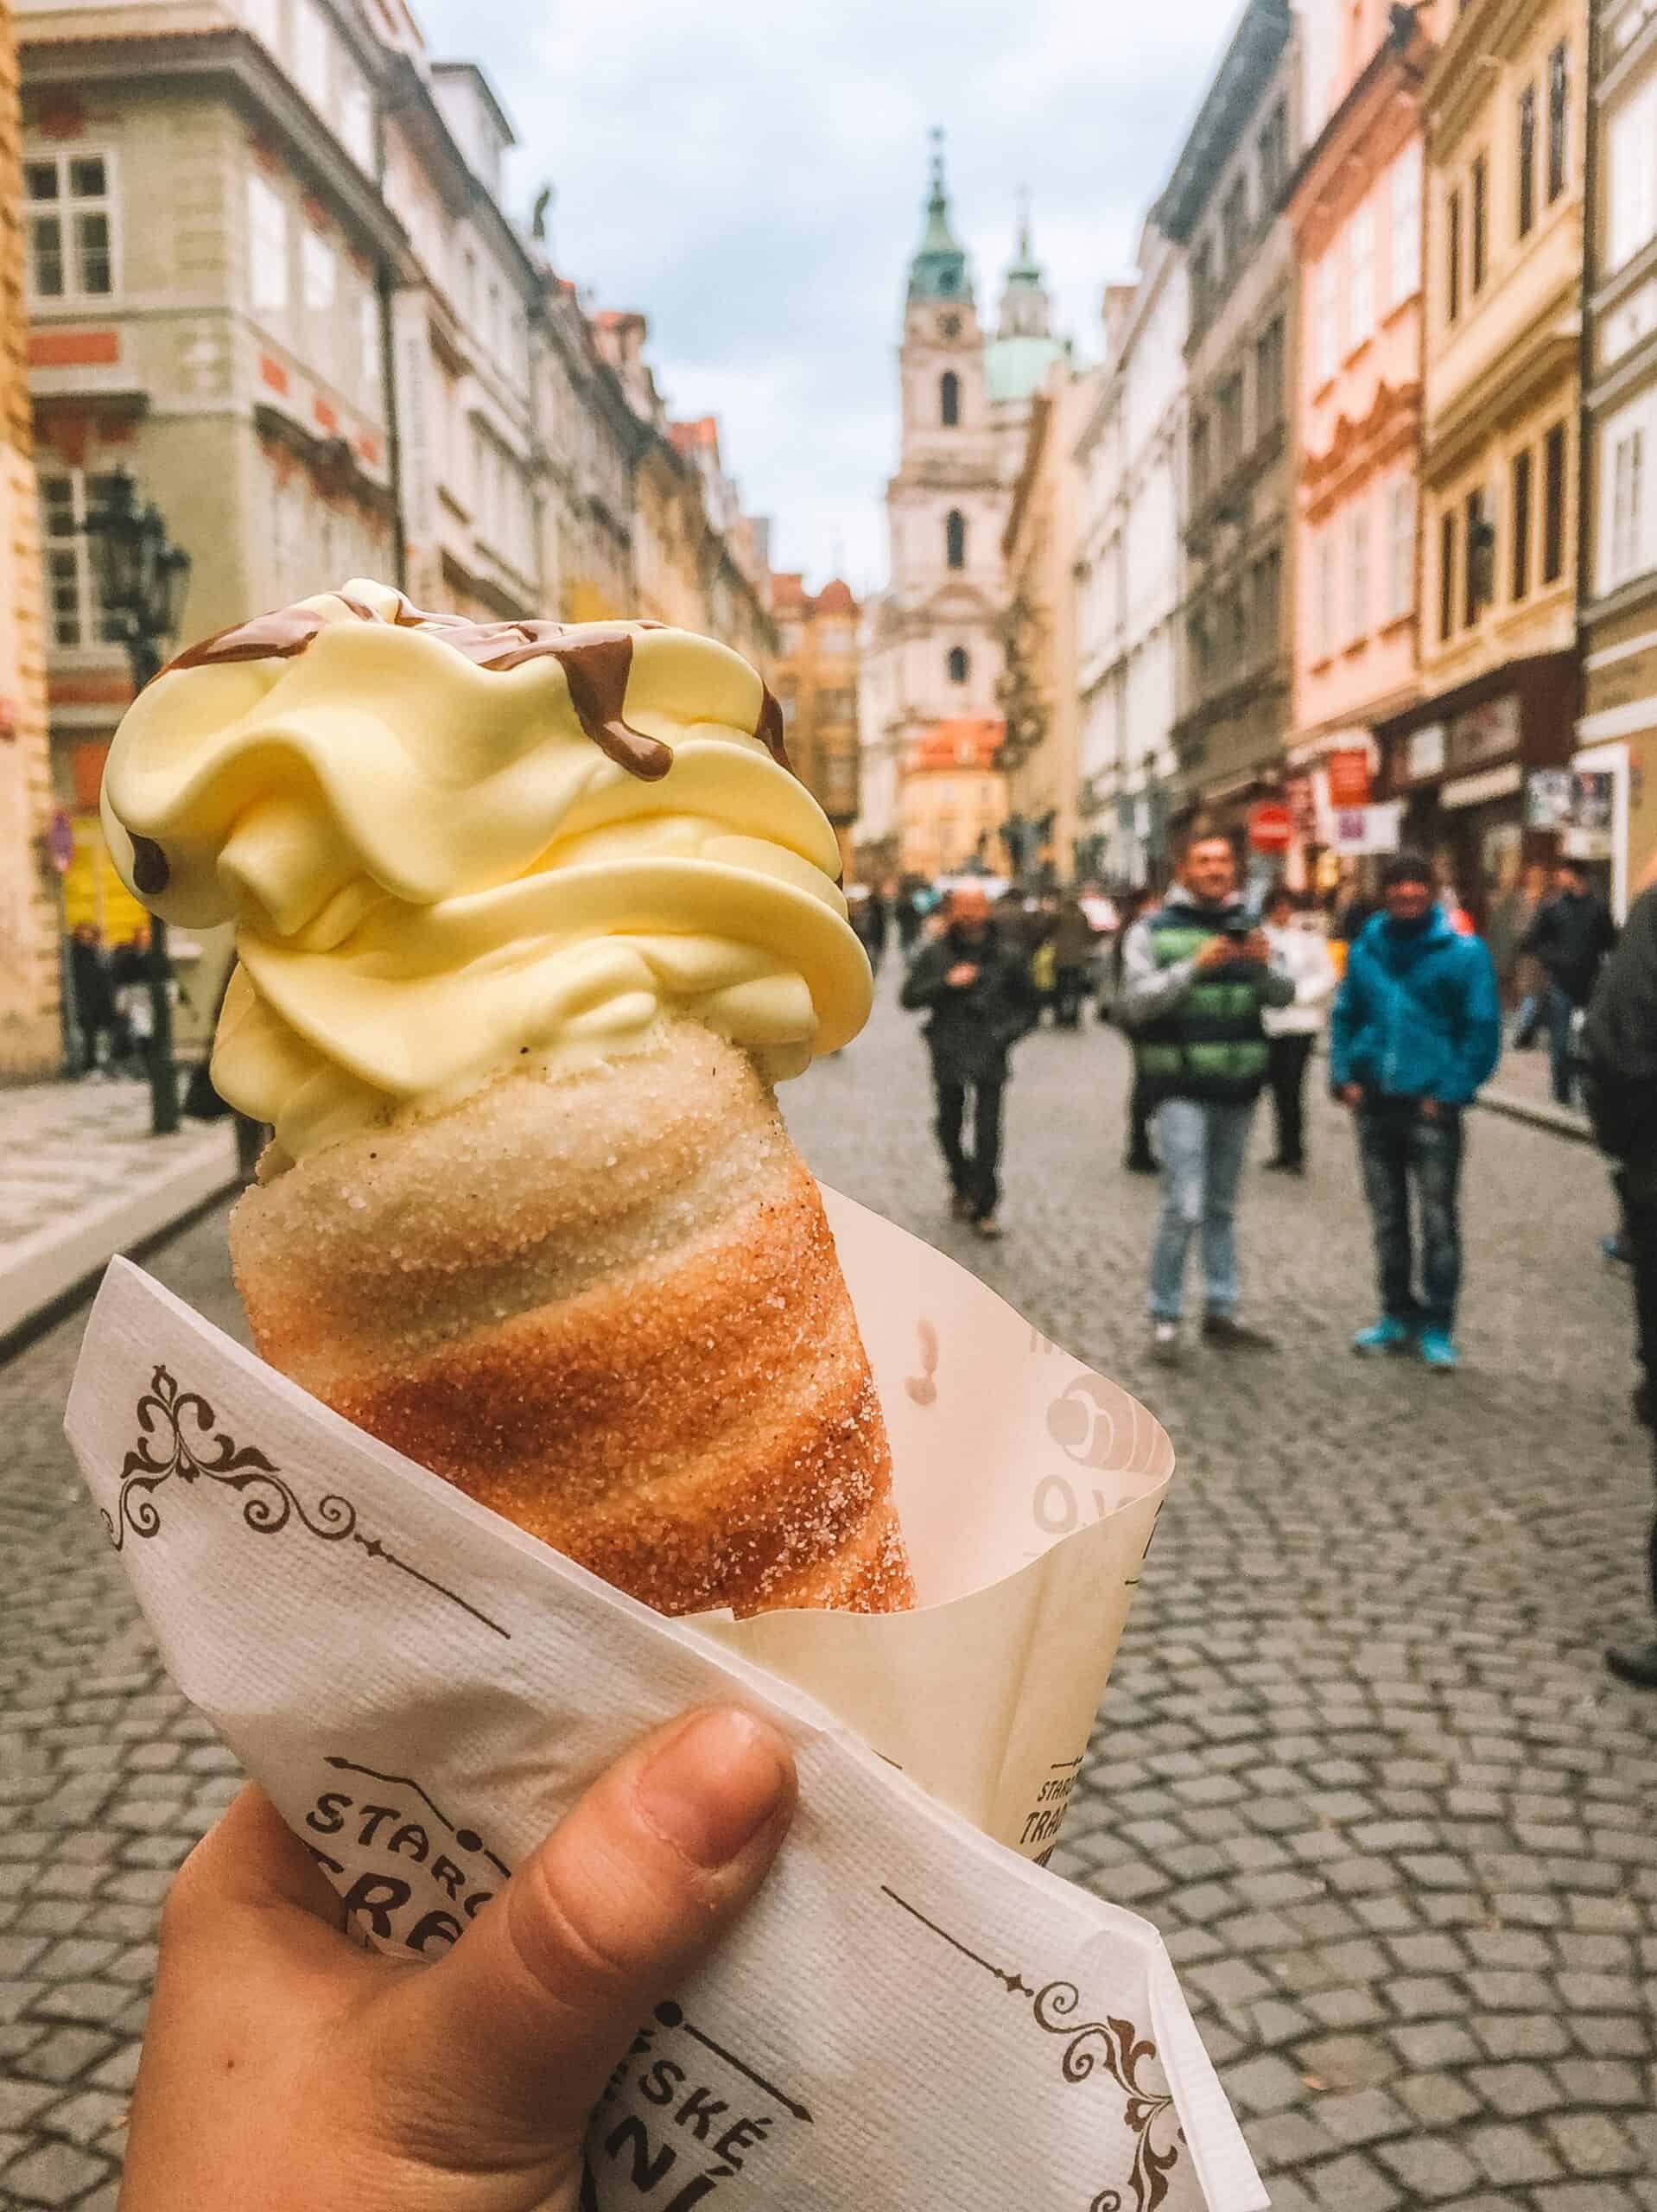 A tasty trdelník filled with soft serve ice cream.